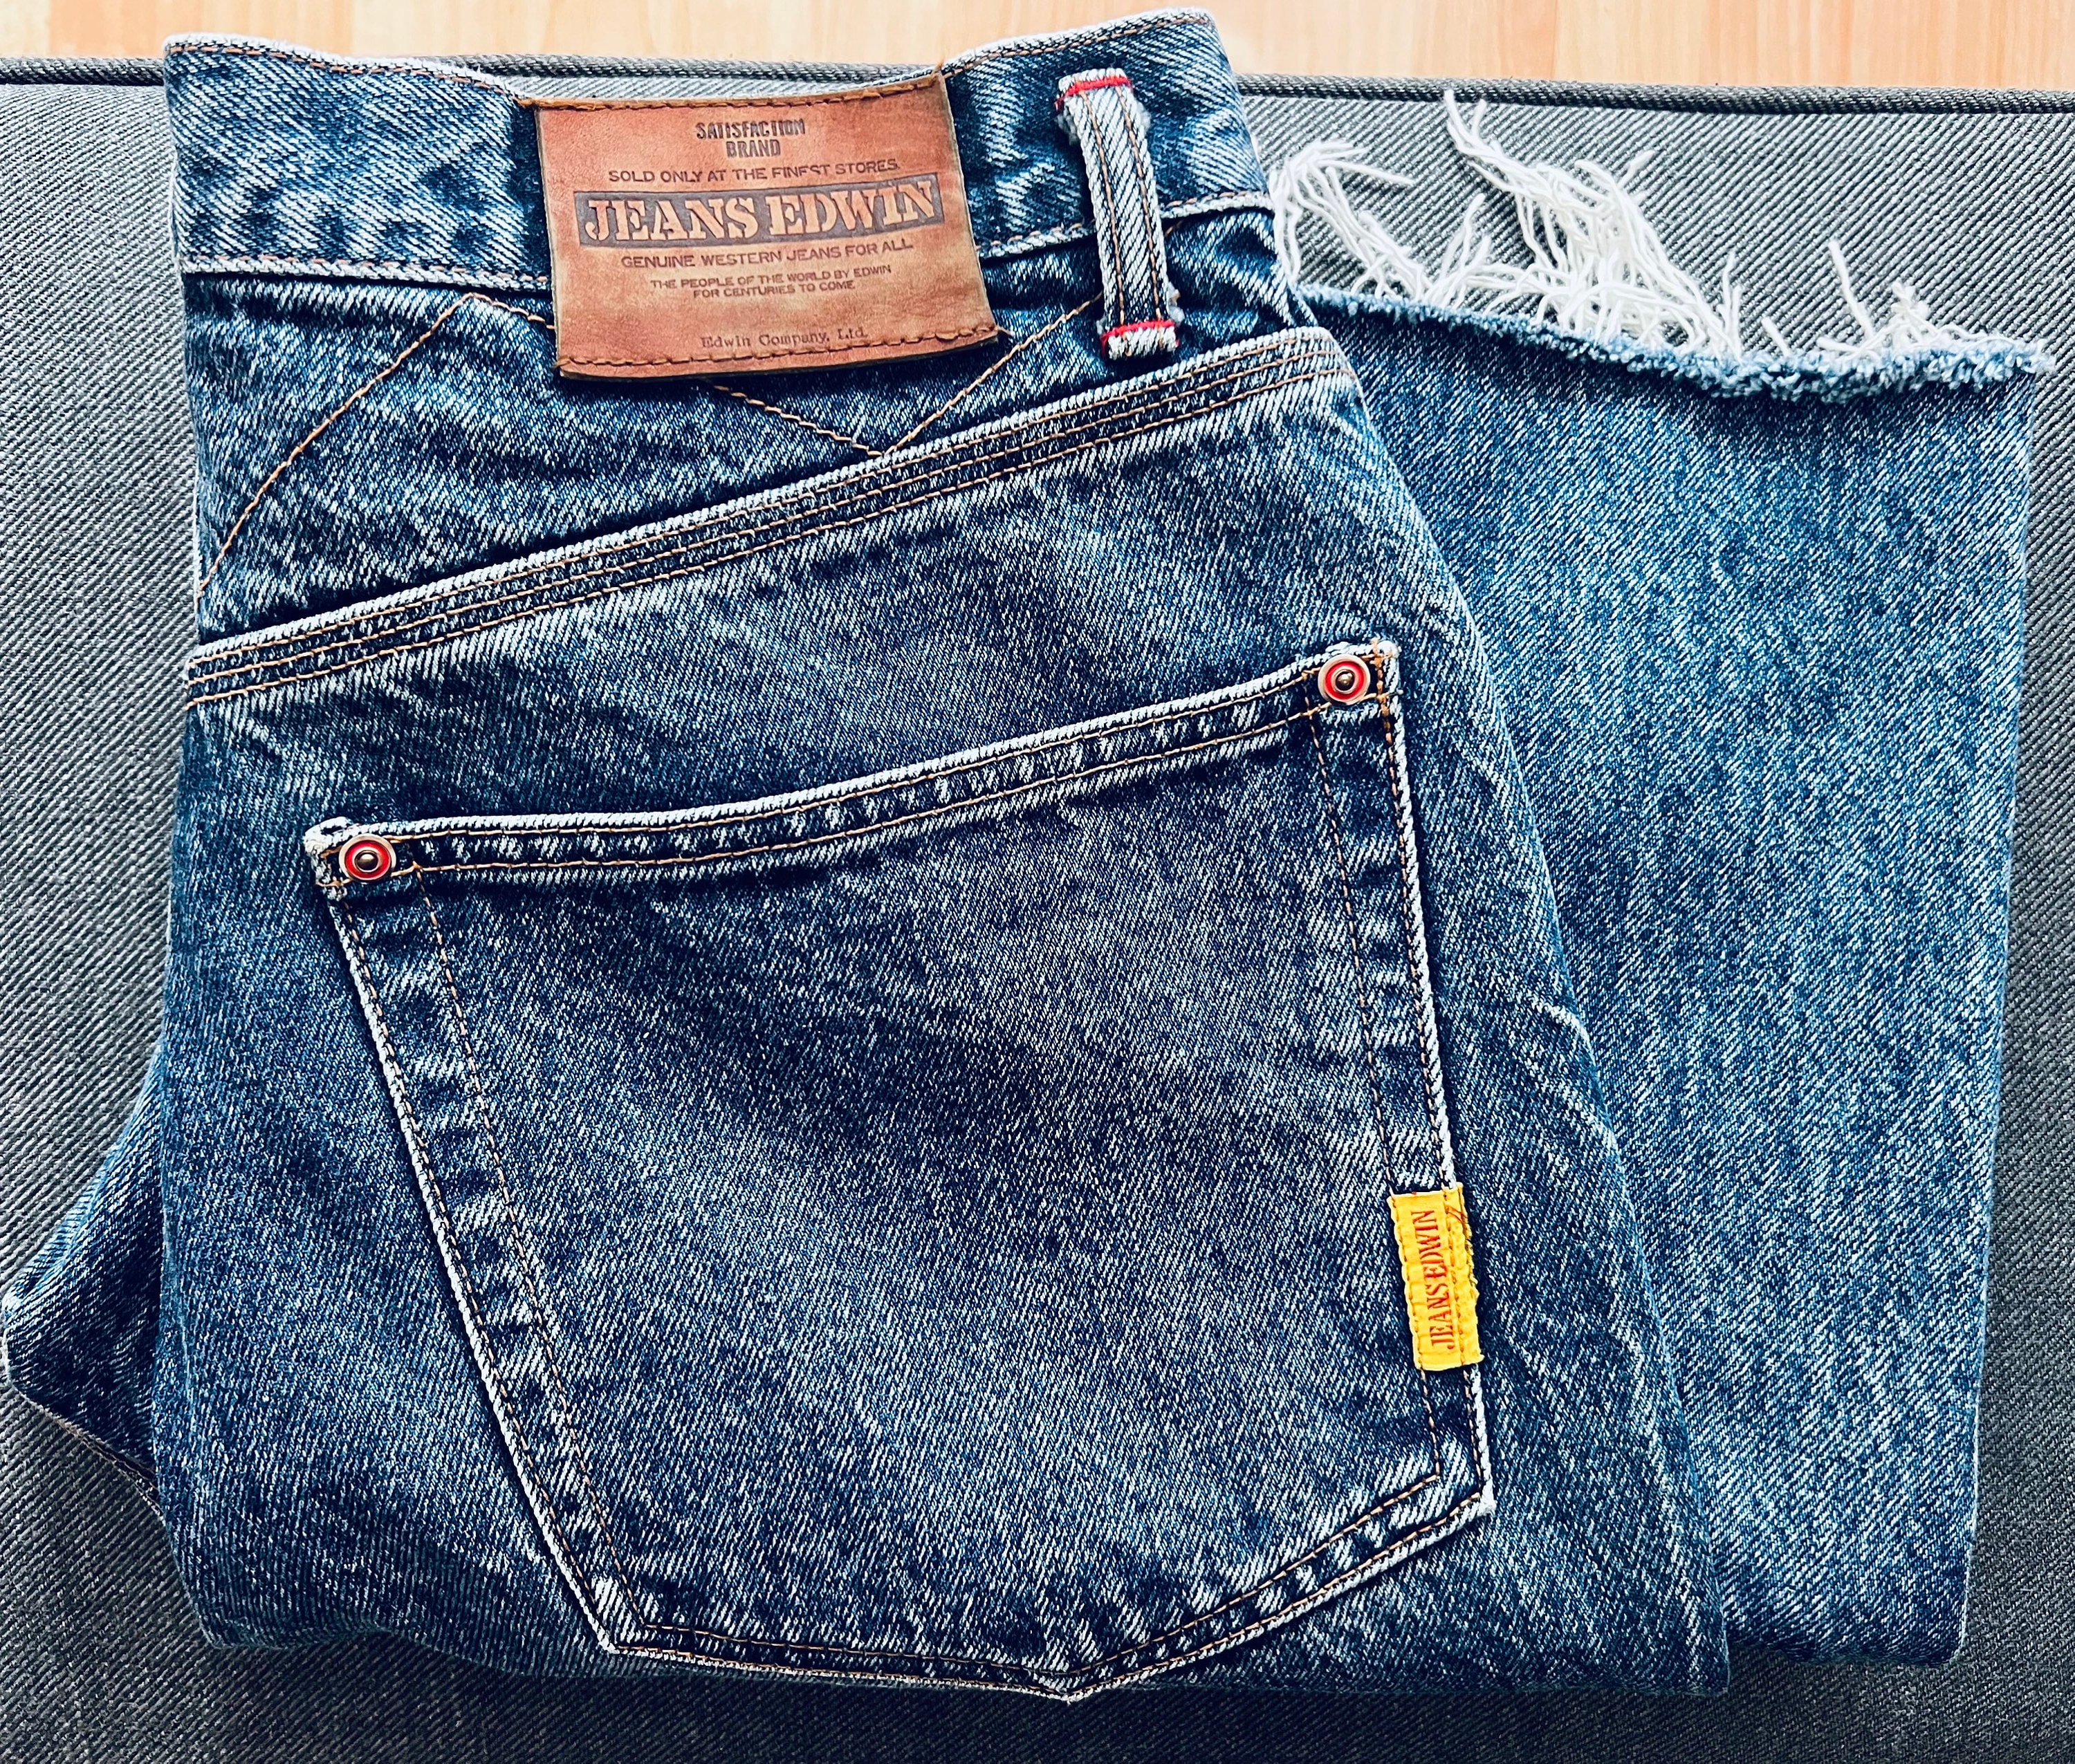 Buy Edwin Jeans Vintage Edwin Made in Japan Blue Trip Edgeline Skinny Slim  Jeans Pants Size 32/33x32.5 Online in India - Etsy